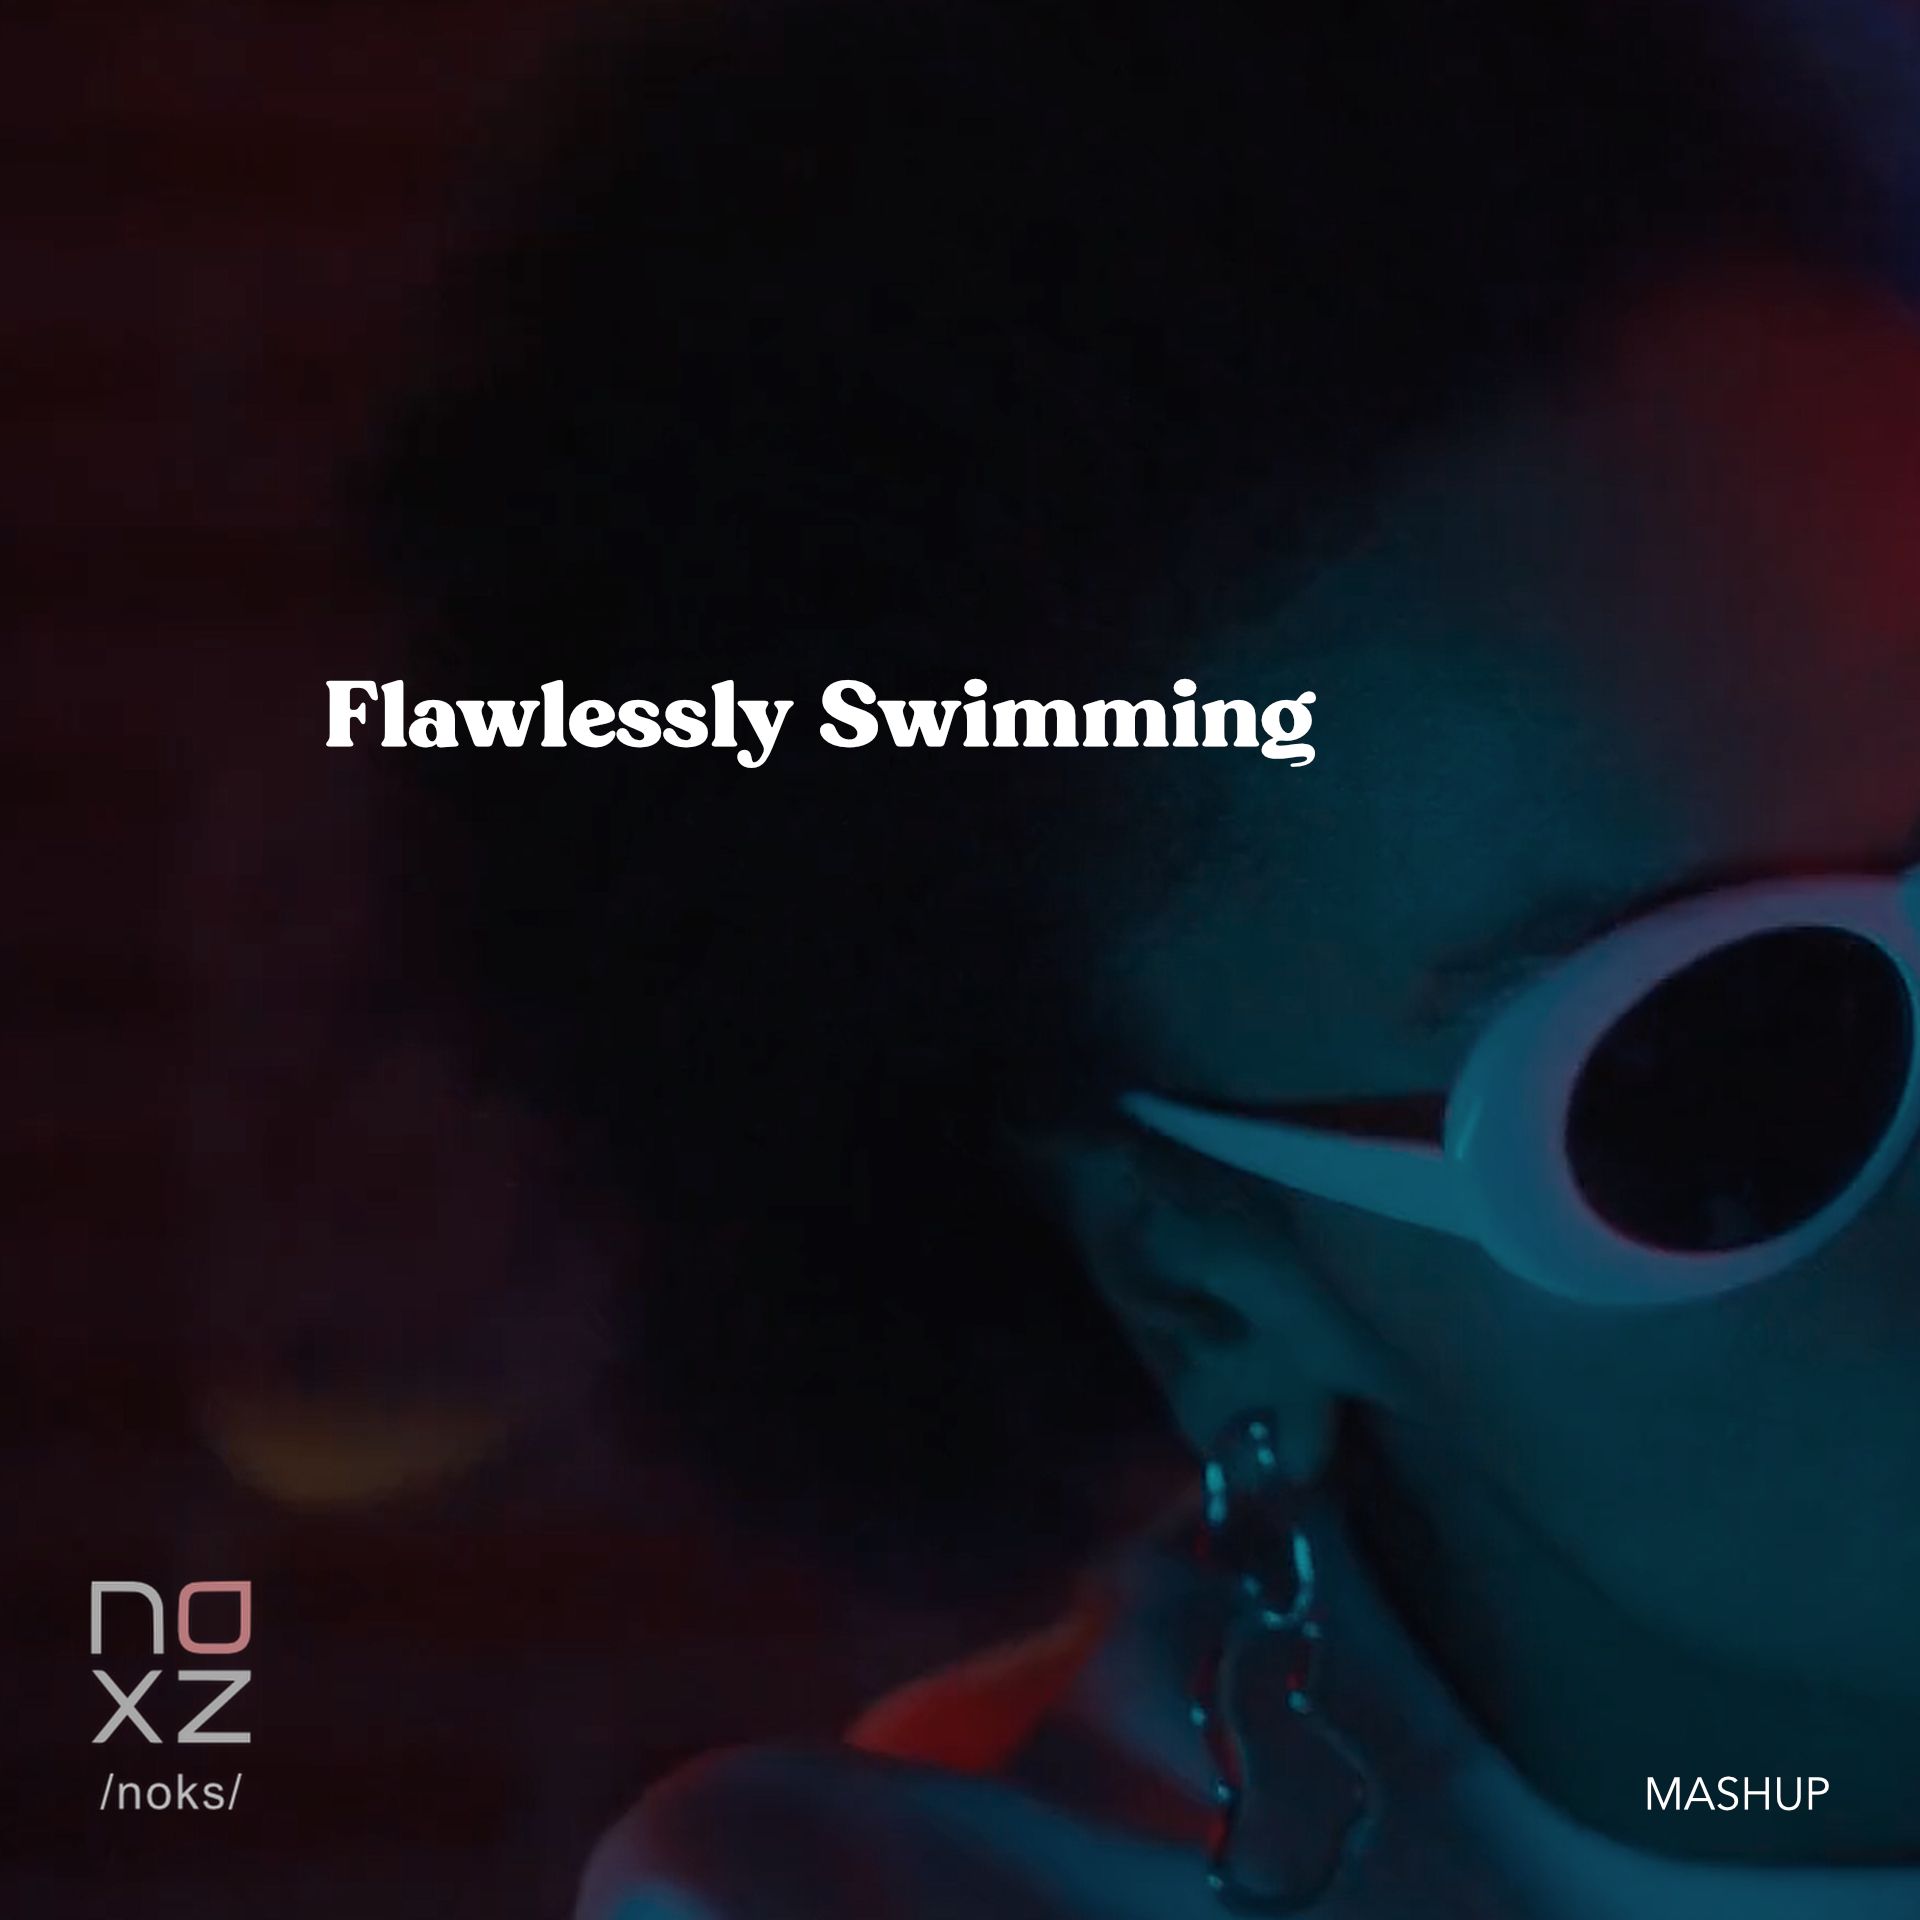 डाउनलोड करा Flawlessly Swimming [MASHUP]